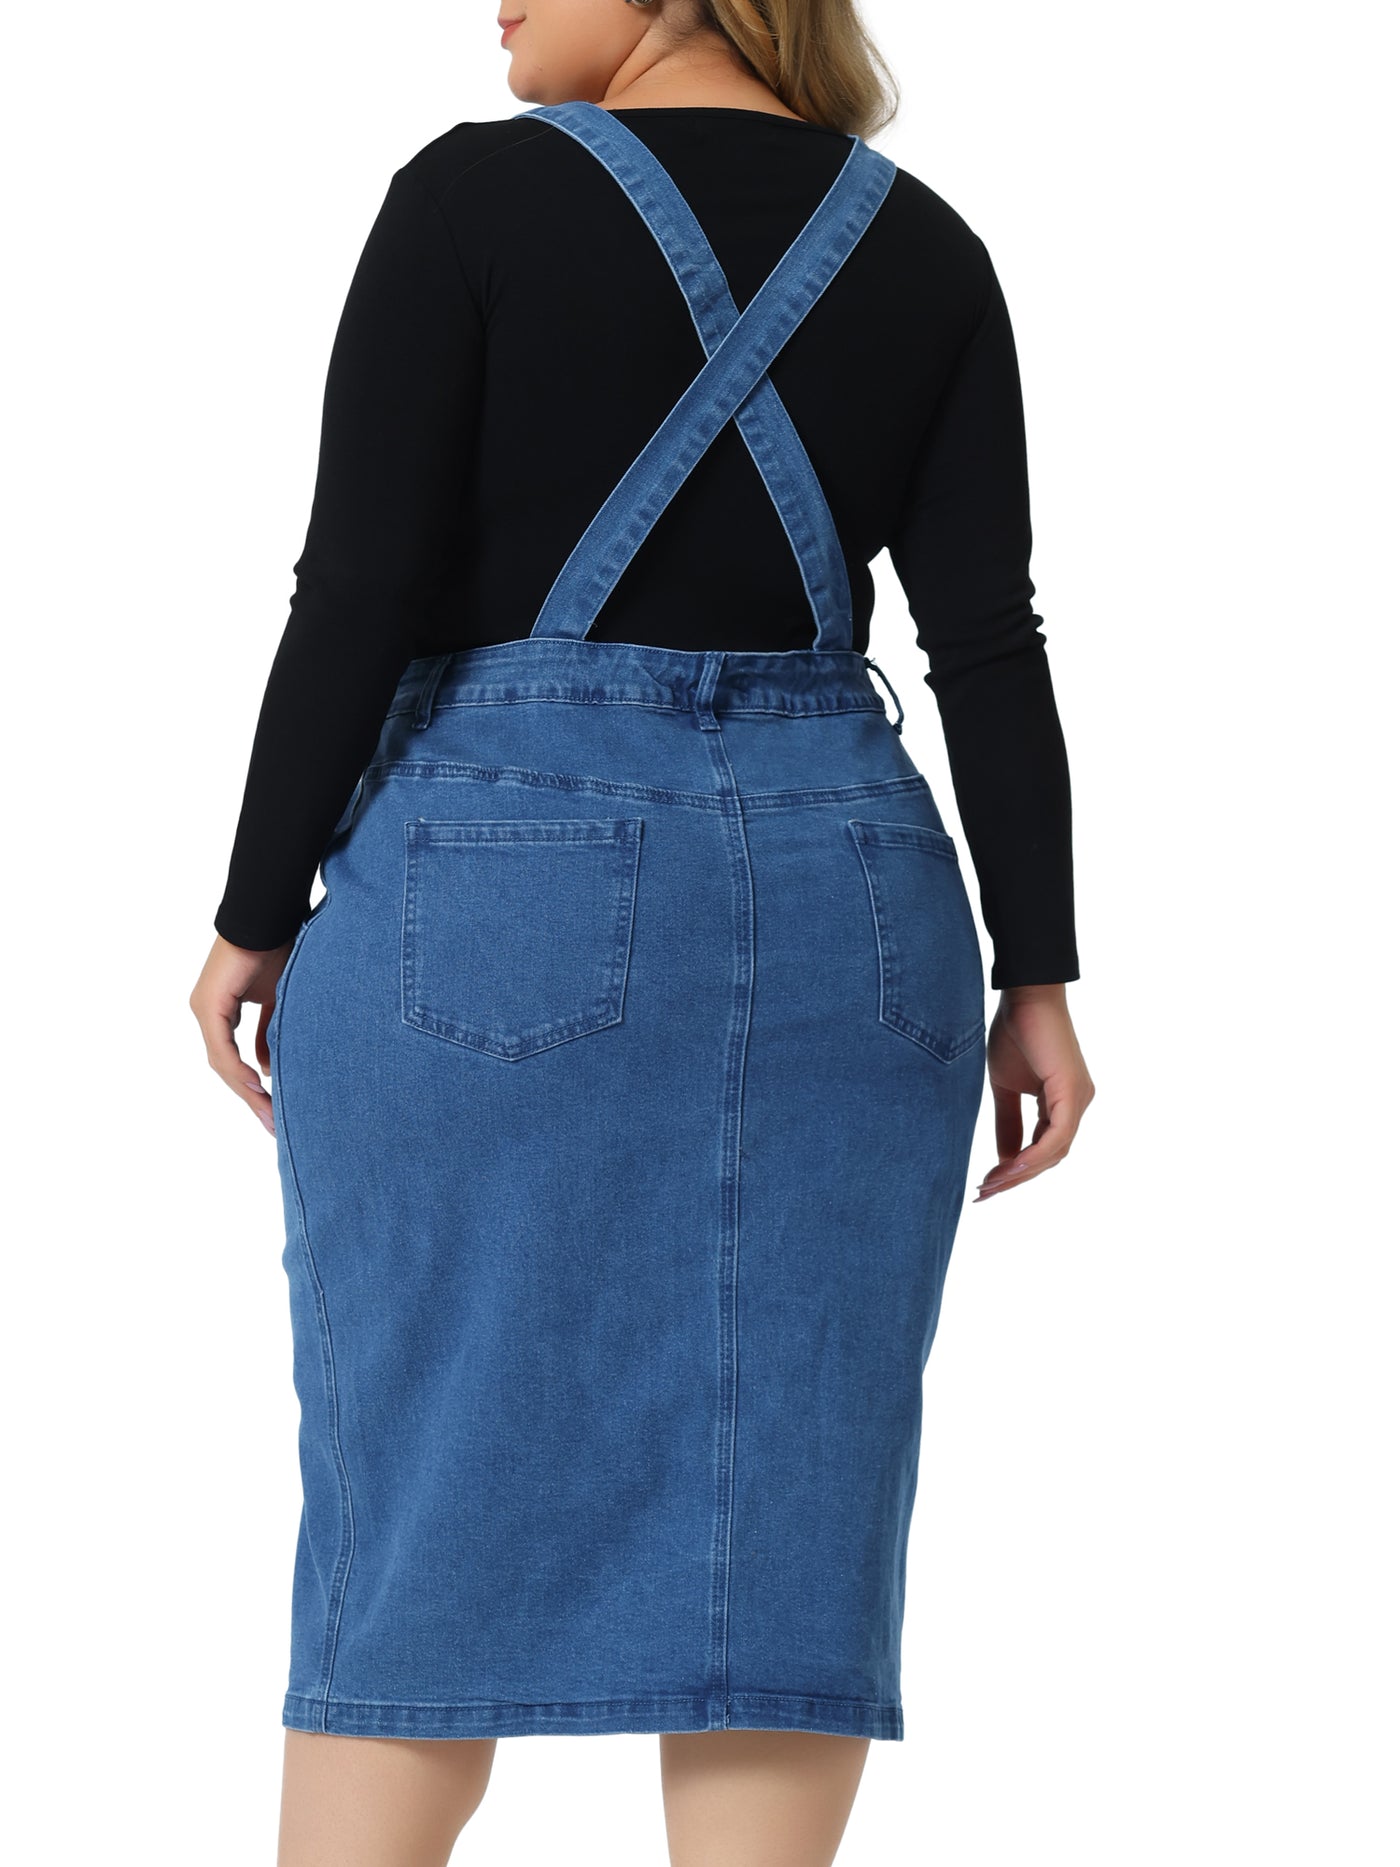 Bublédon Plus Size Overall Dress for Women Classic Adjustable Straps Above Knee Slit Hem Denim Dresses